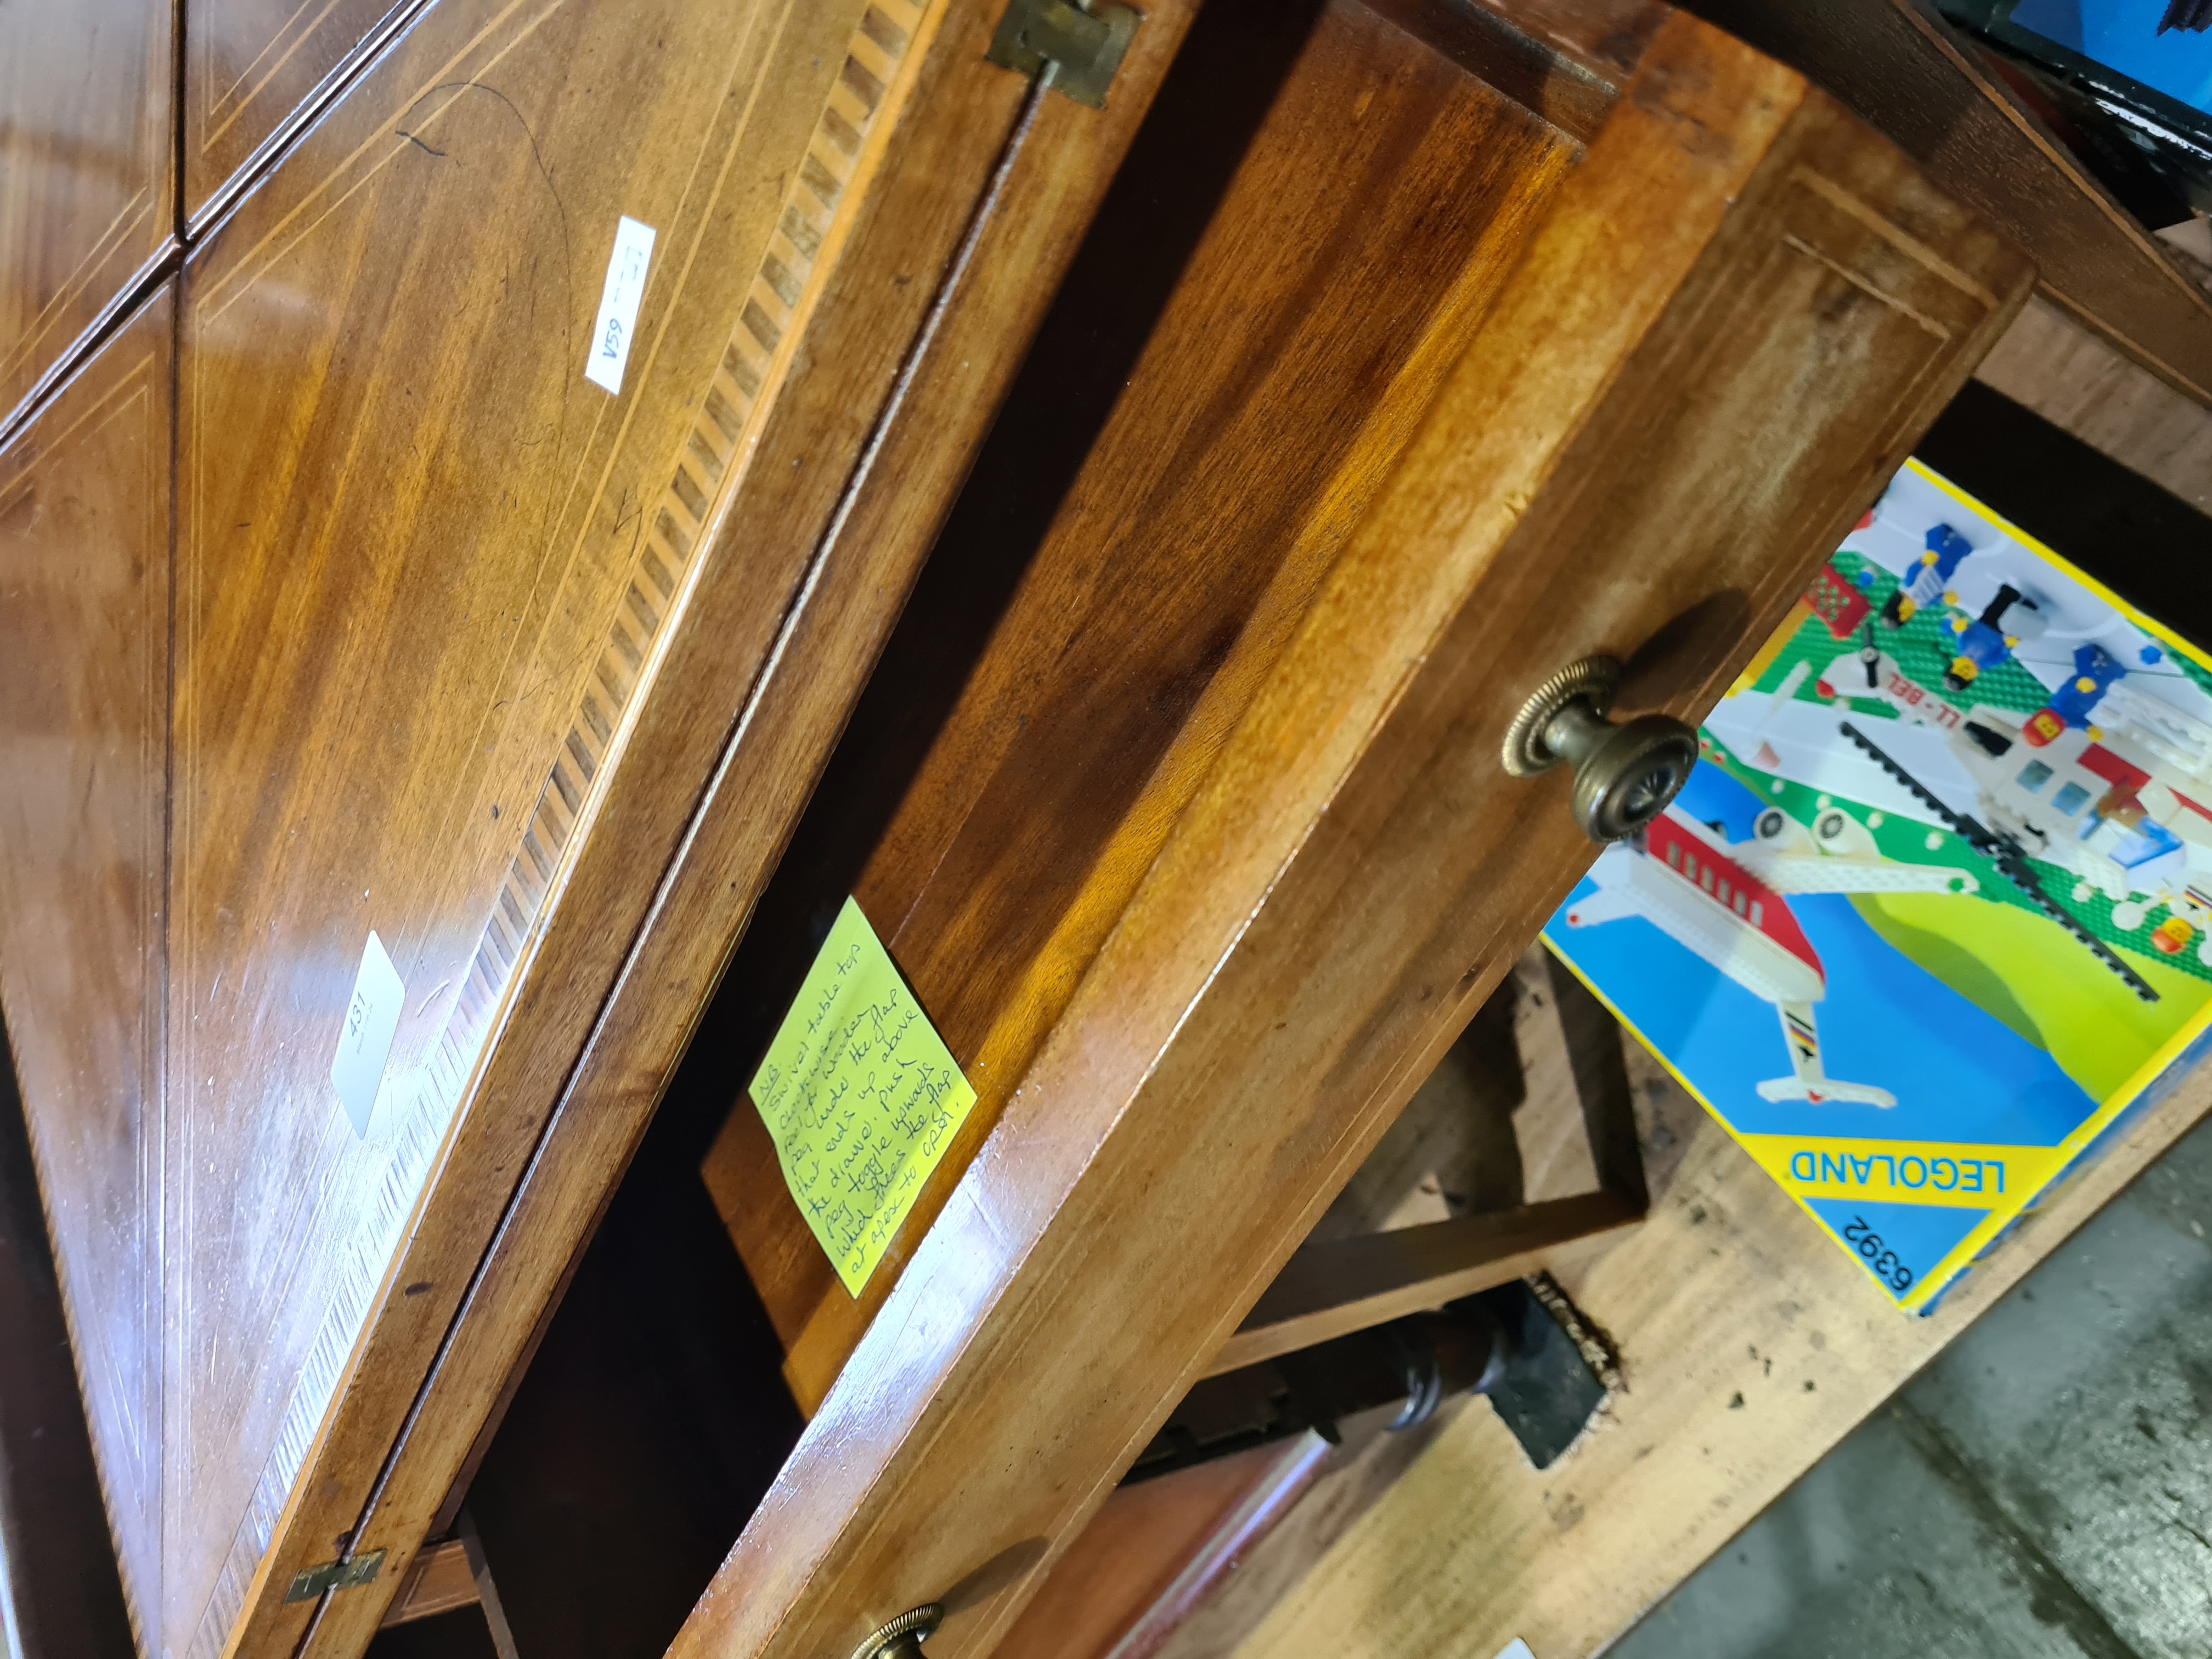 An Edwardian mahogany inlaid envelope card table having one drawer